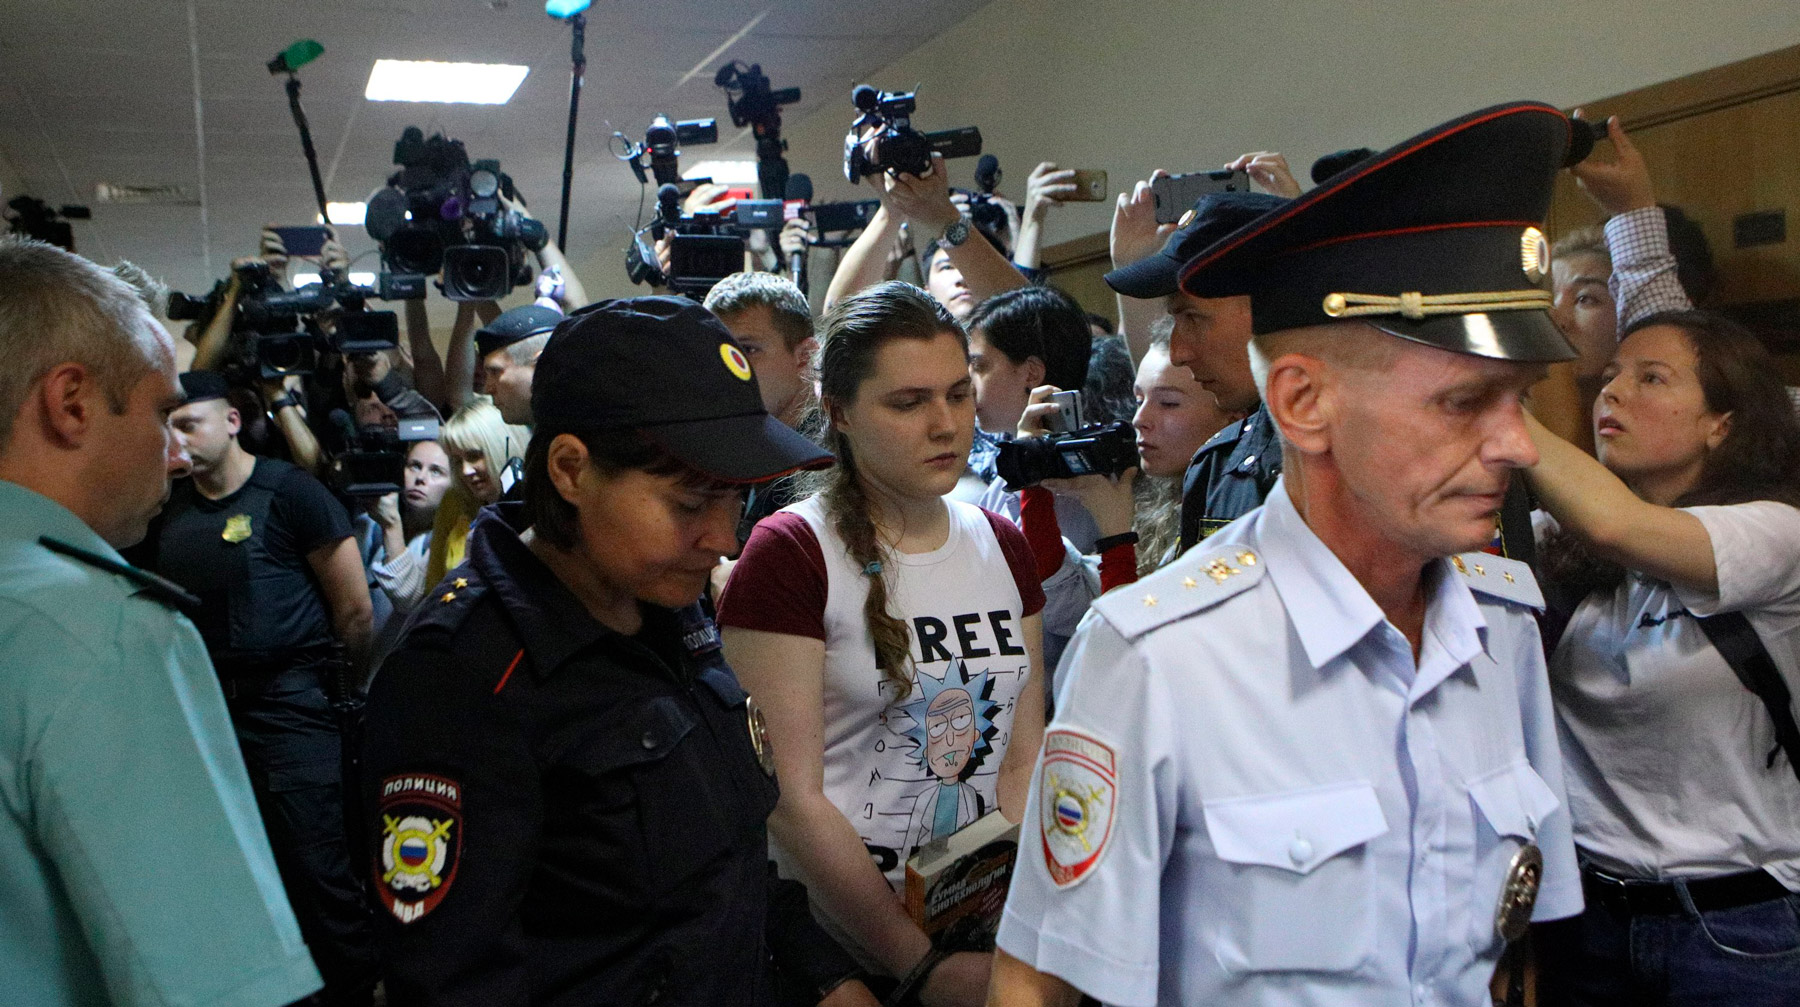 Репортаж «Шторма» из зала суда, где решалась судьба девушек Фото: © Агентство Москва/Никеричев Андрей